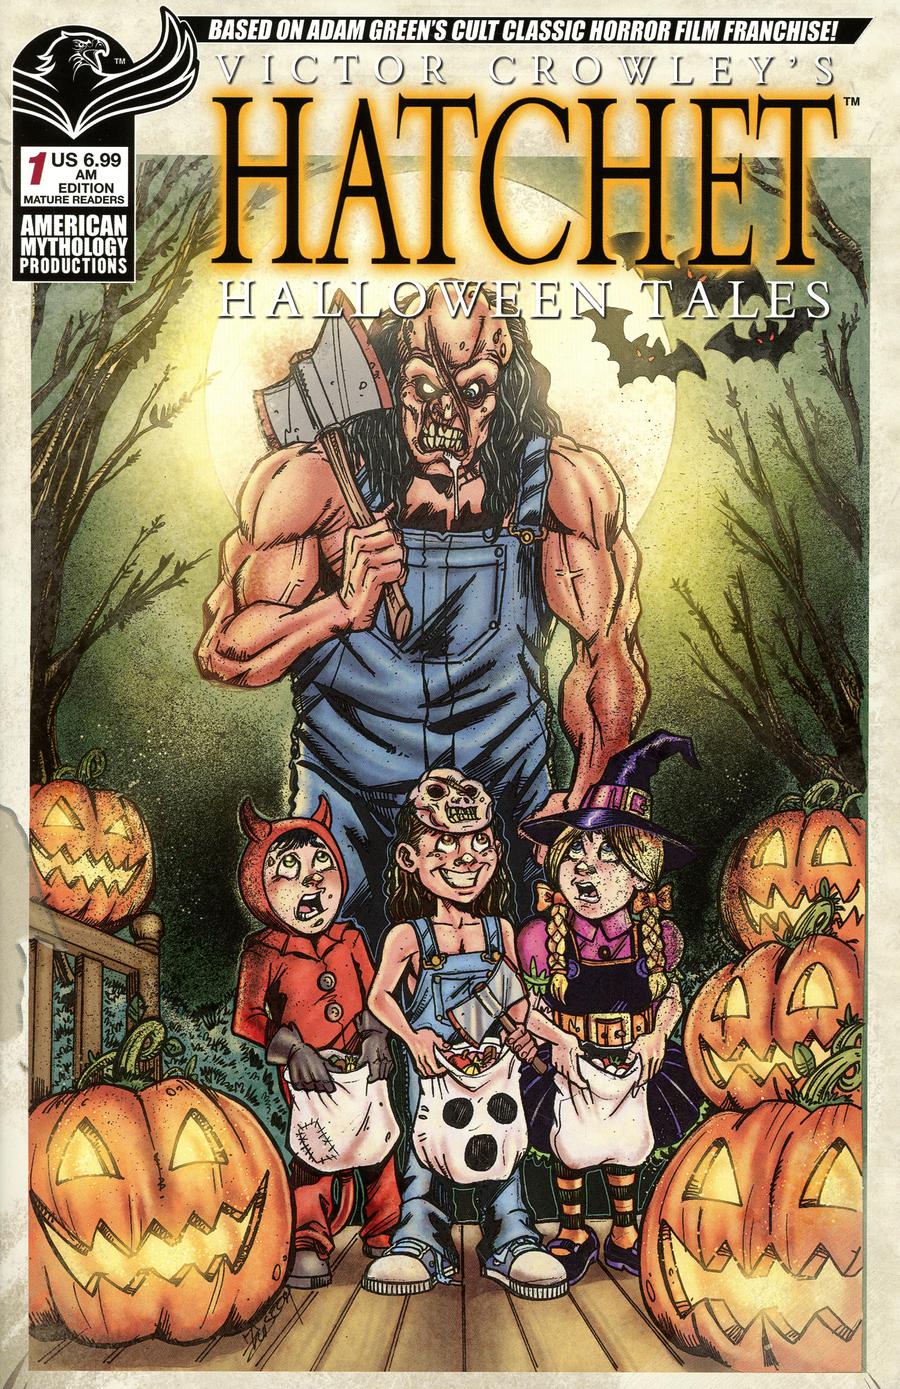 Victor Crowleys Hatchet Halloween Tales #1 Cover E Variant Puis Calzada American Mythology Edition